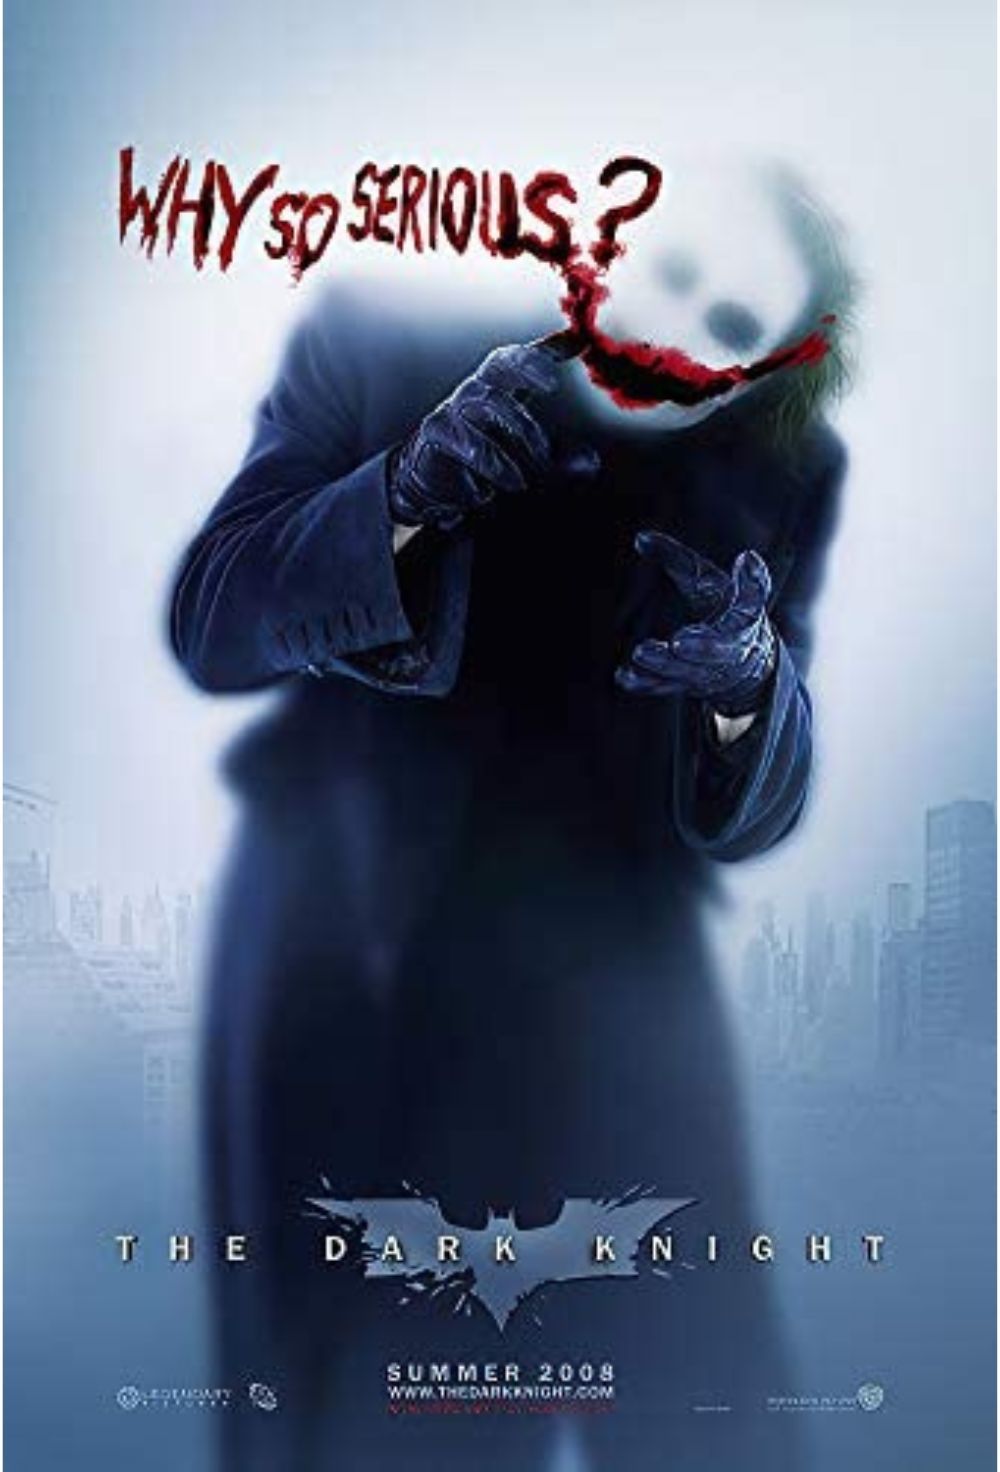 The Dark Knight teaser poster